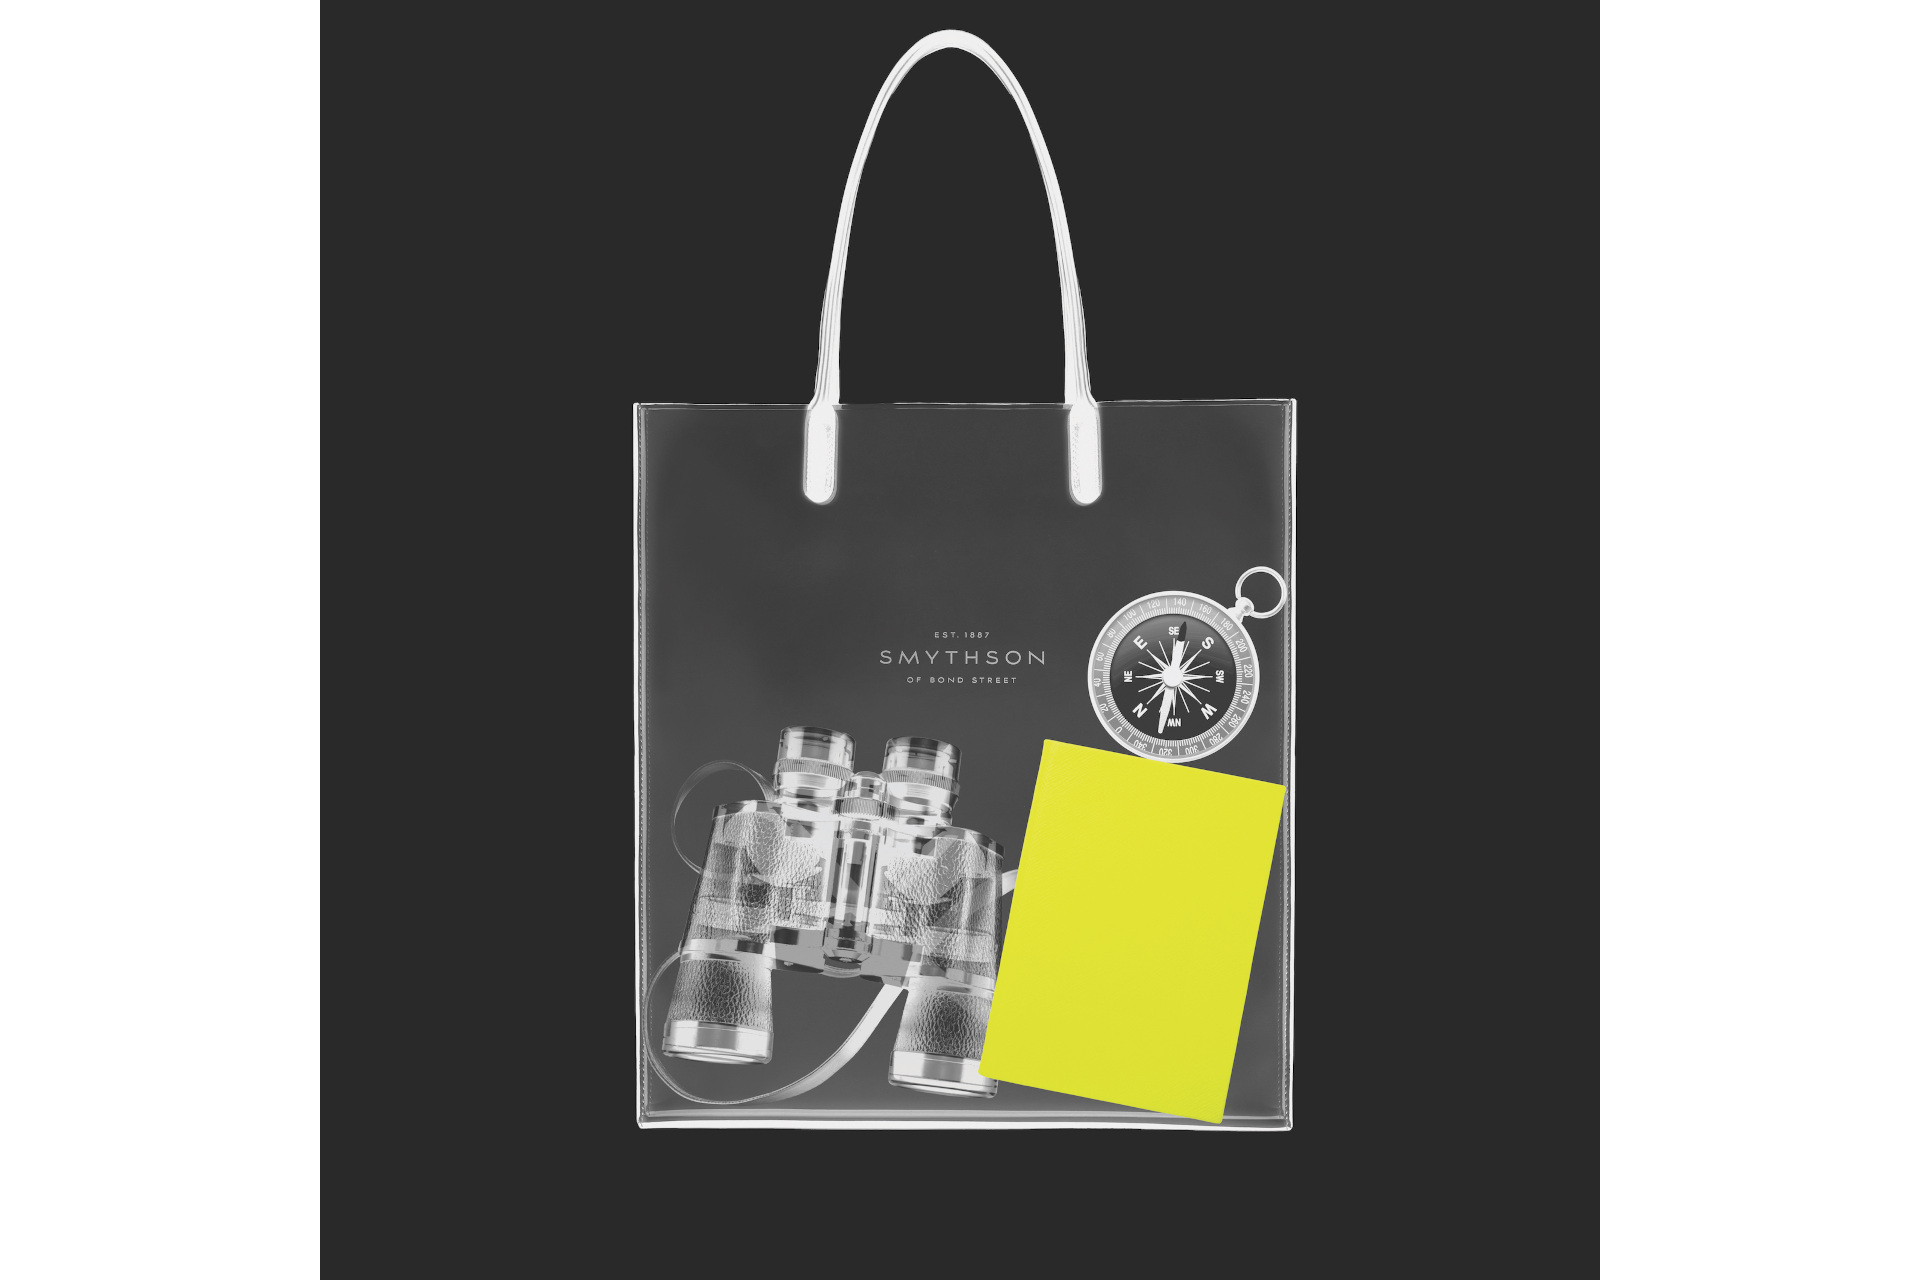 Black xray style image of handbag with yellow notebook inside